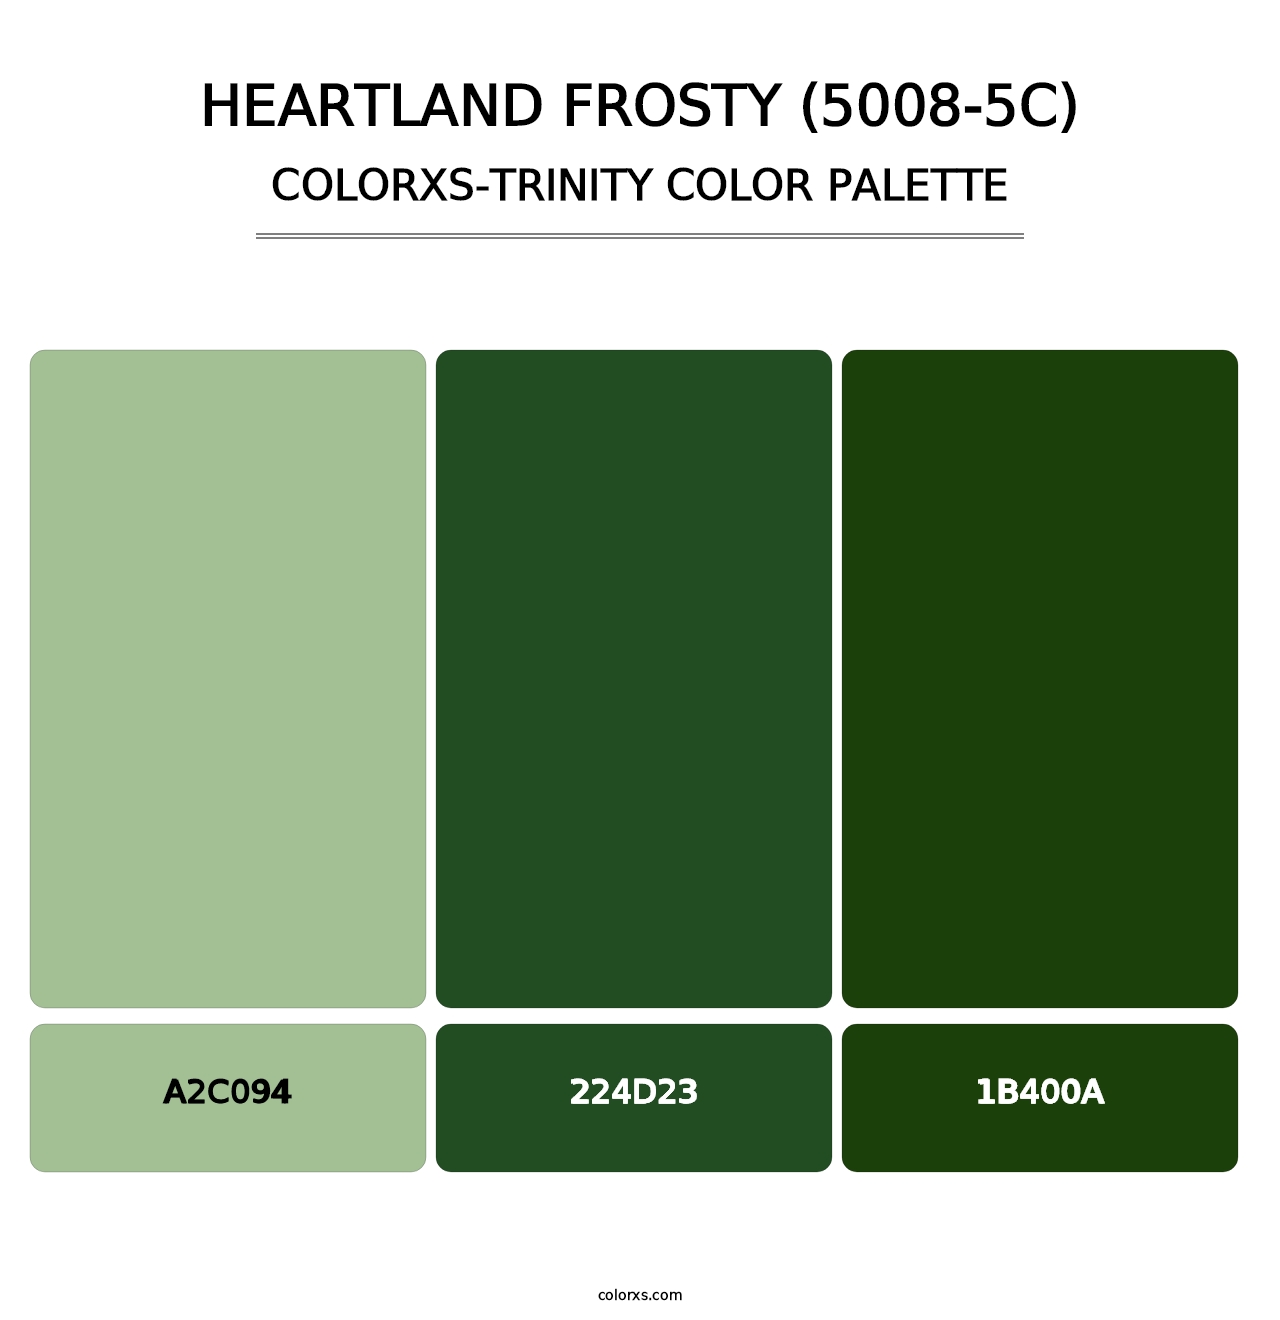 Heartland Frosty (5008-5C) - Colorxs Trinity Palette